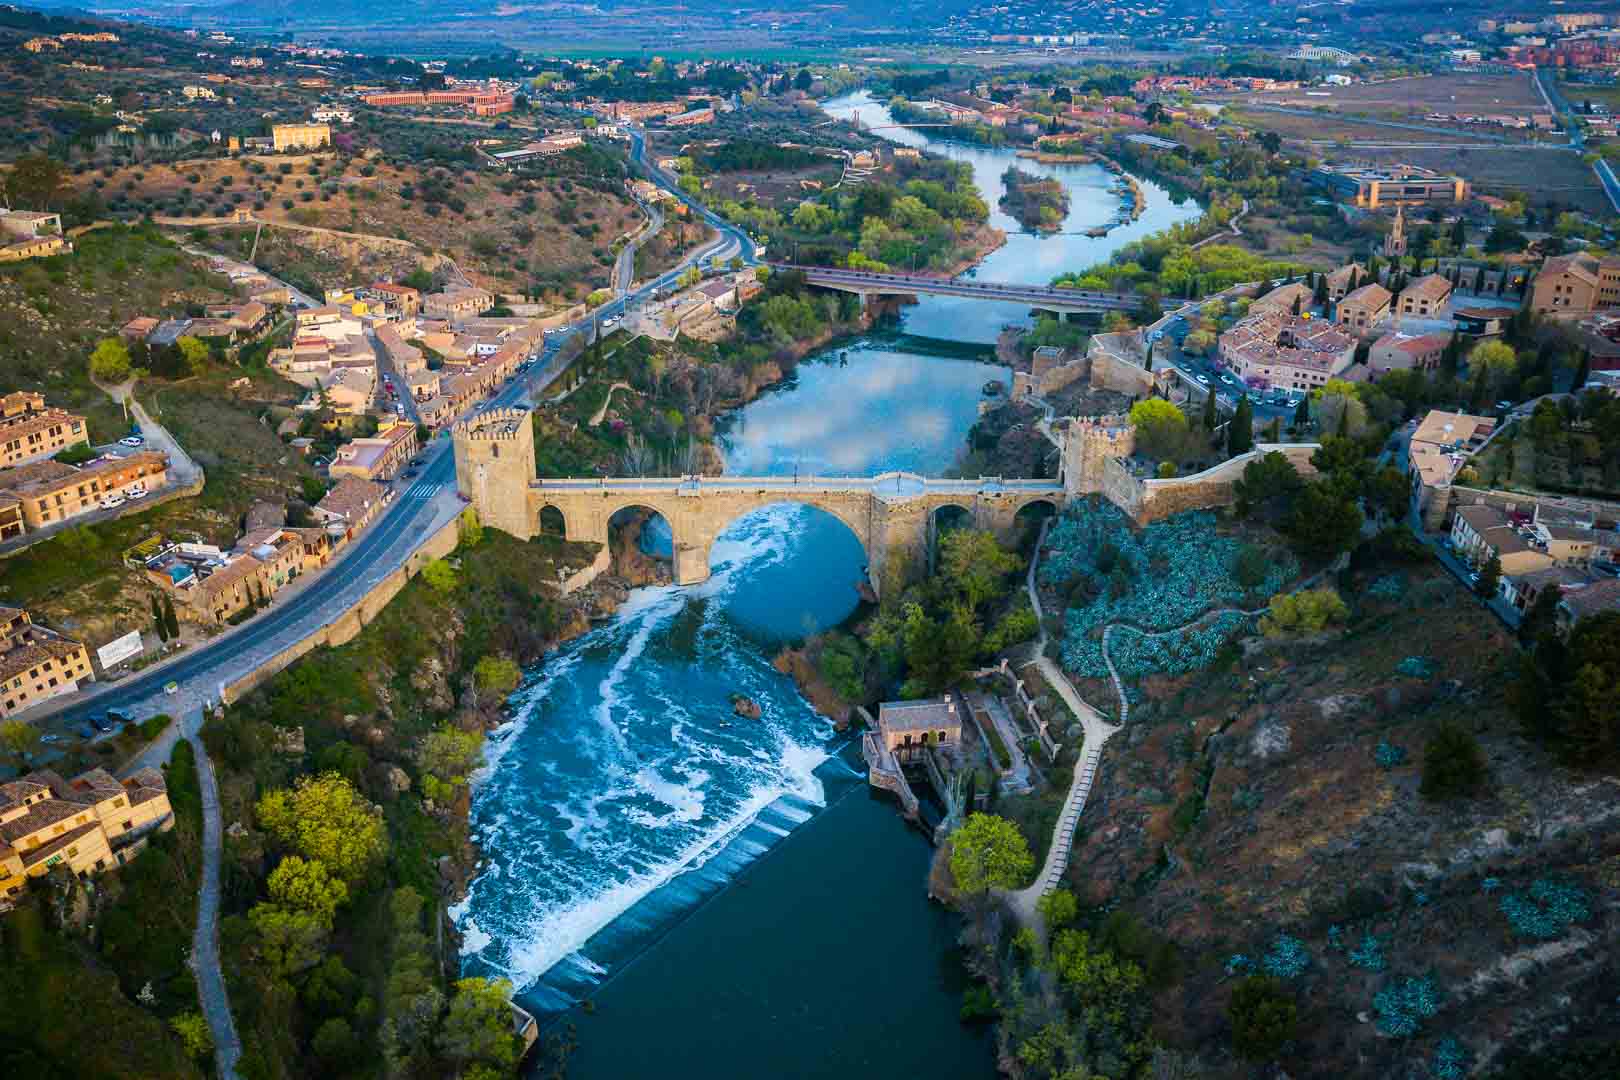 Puente de San Martin Toledo – A Feat of Medieval Architecture